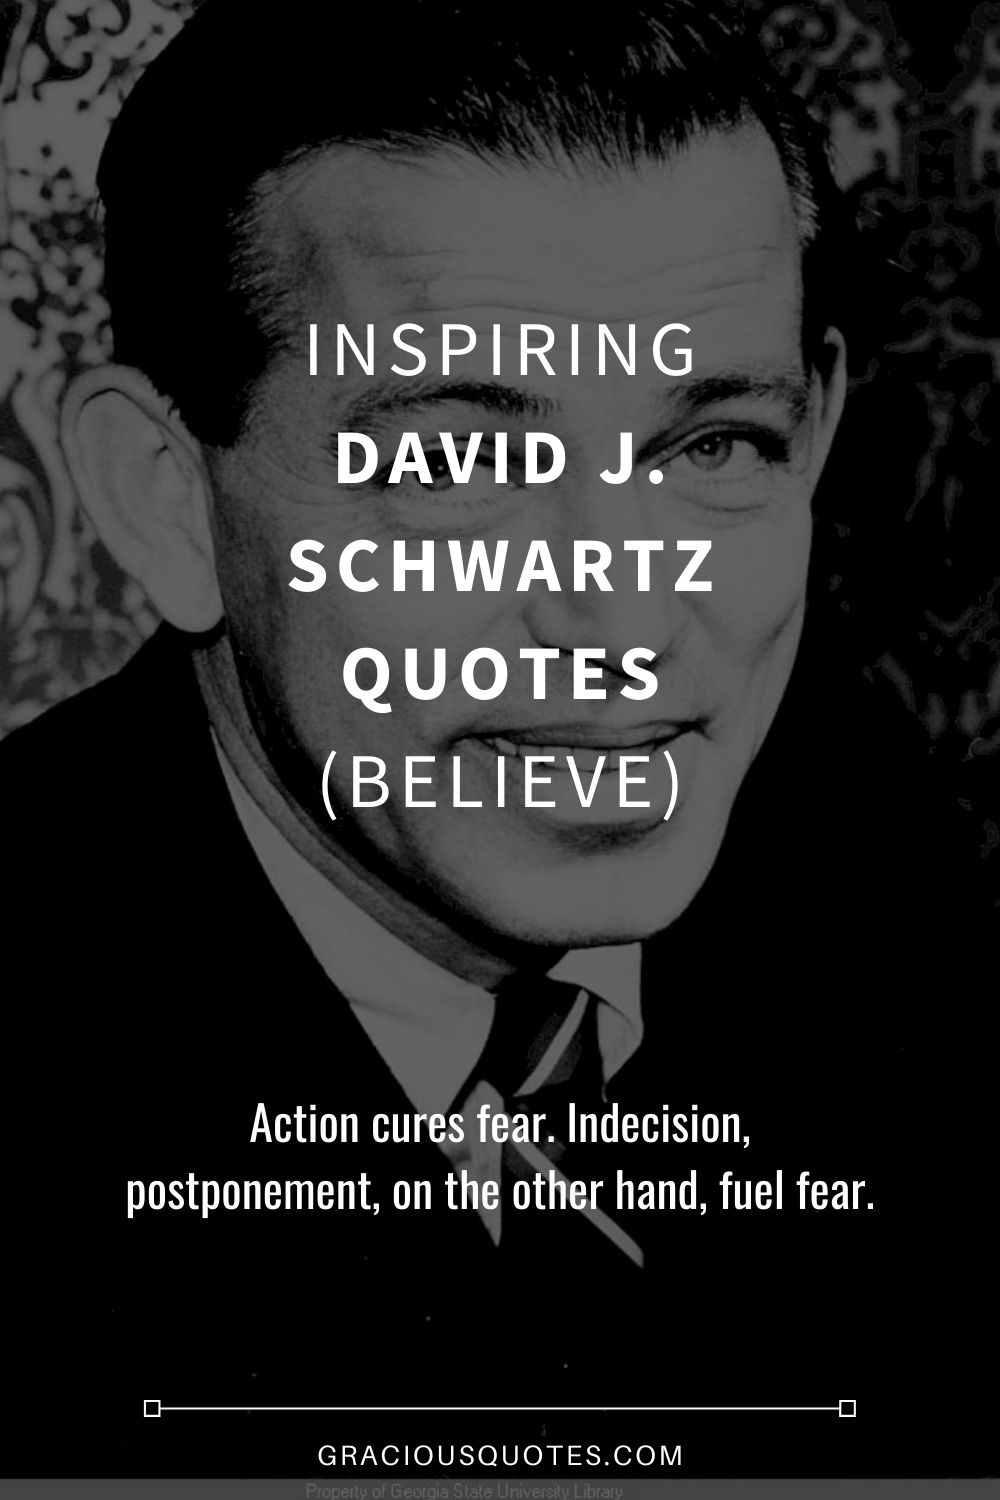 Inspiring David J. Schwartz Quotes (BELIEVE) - Gracious Quotes